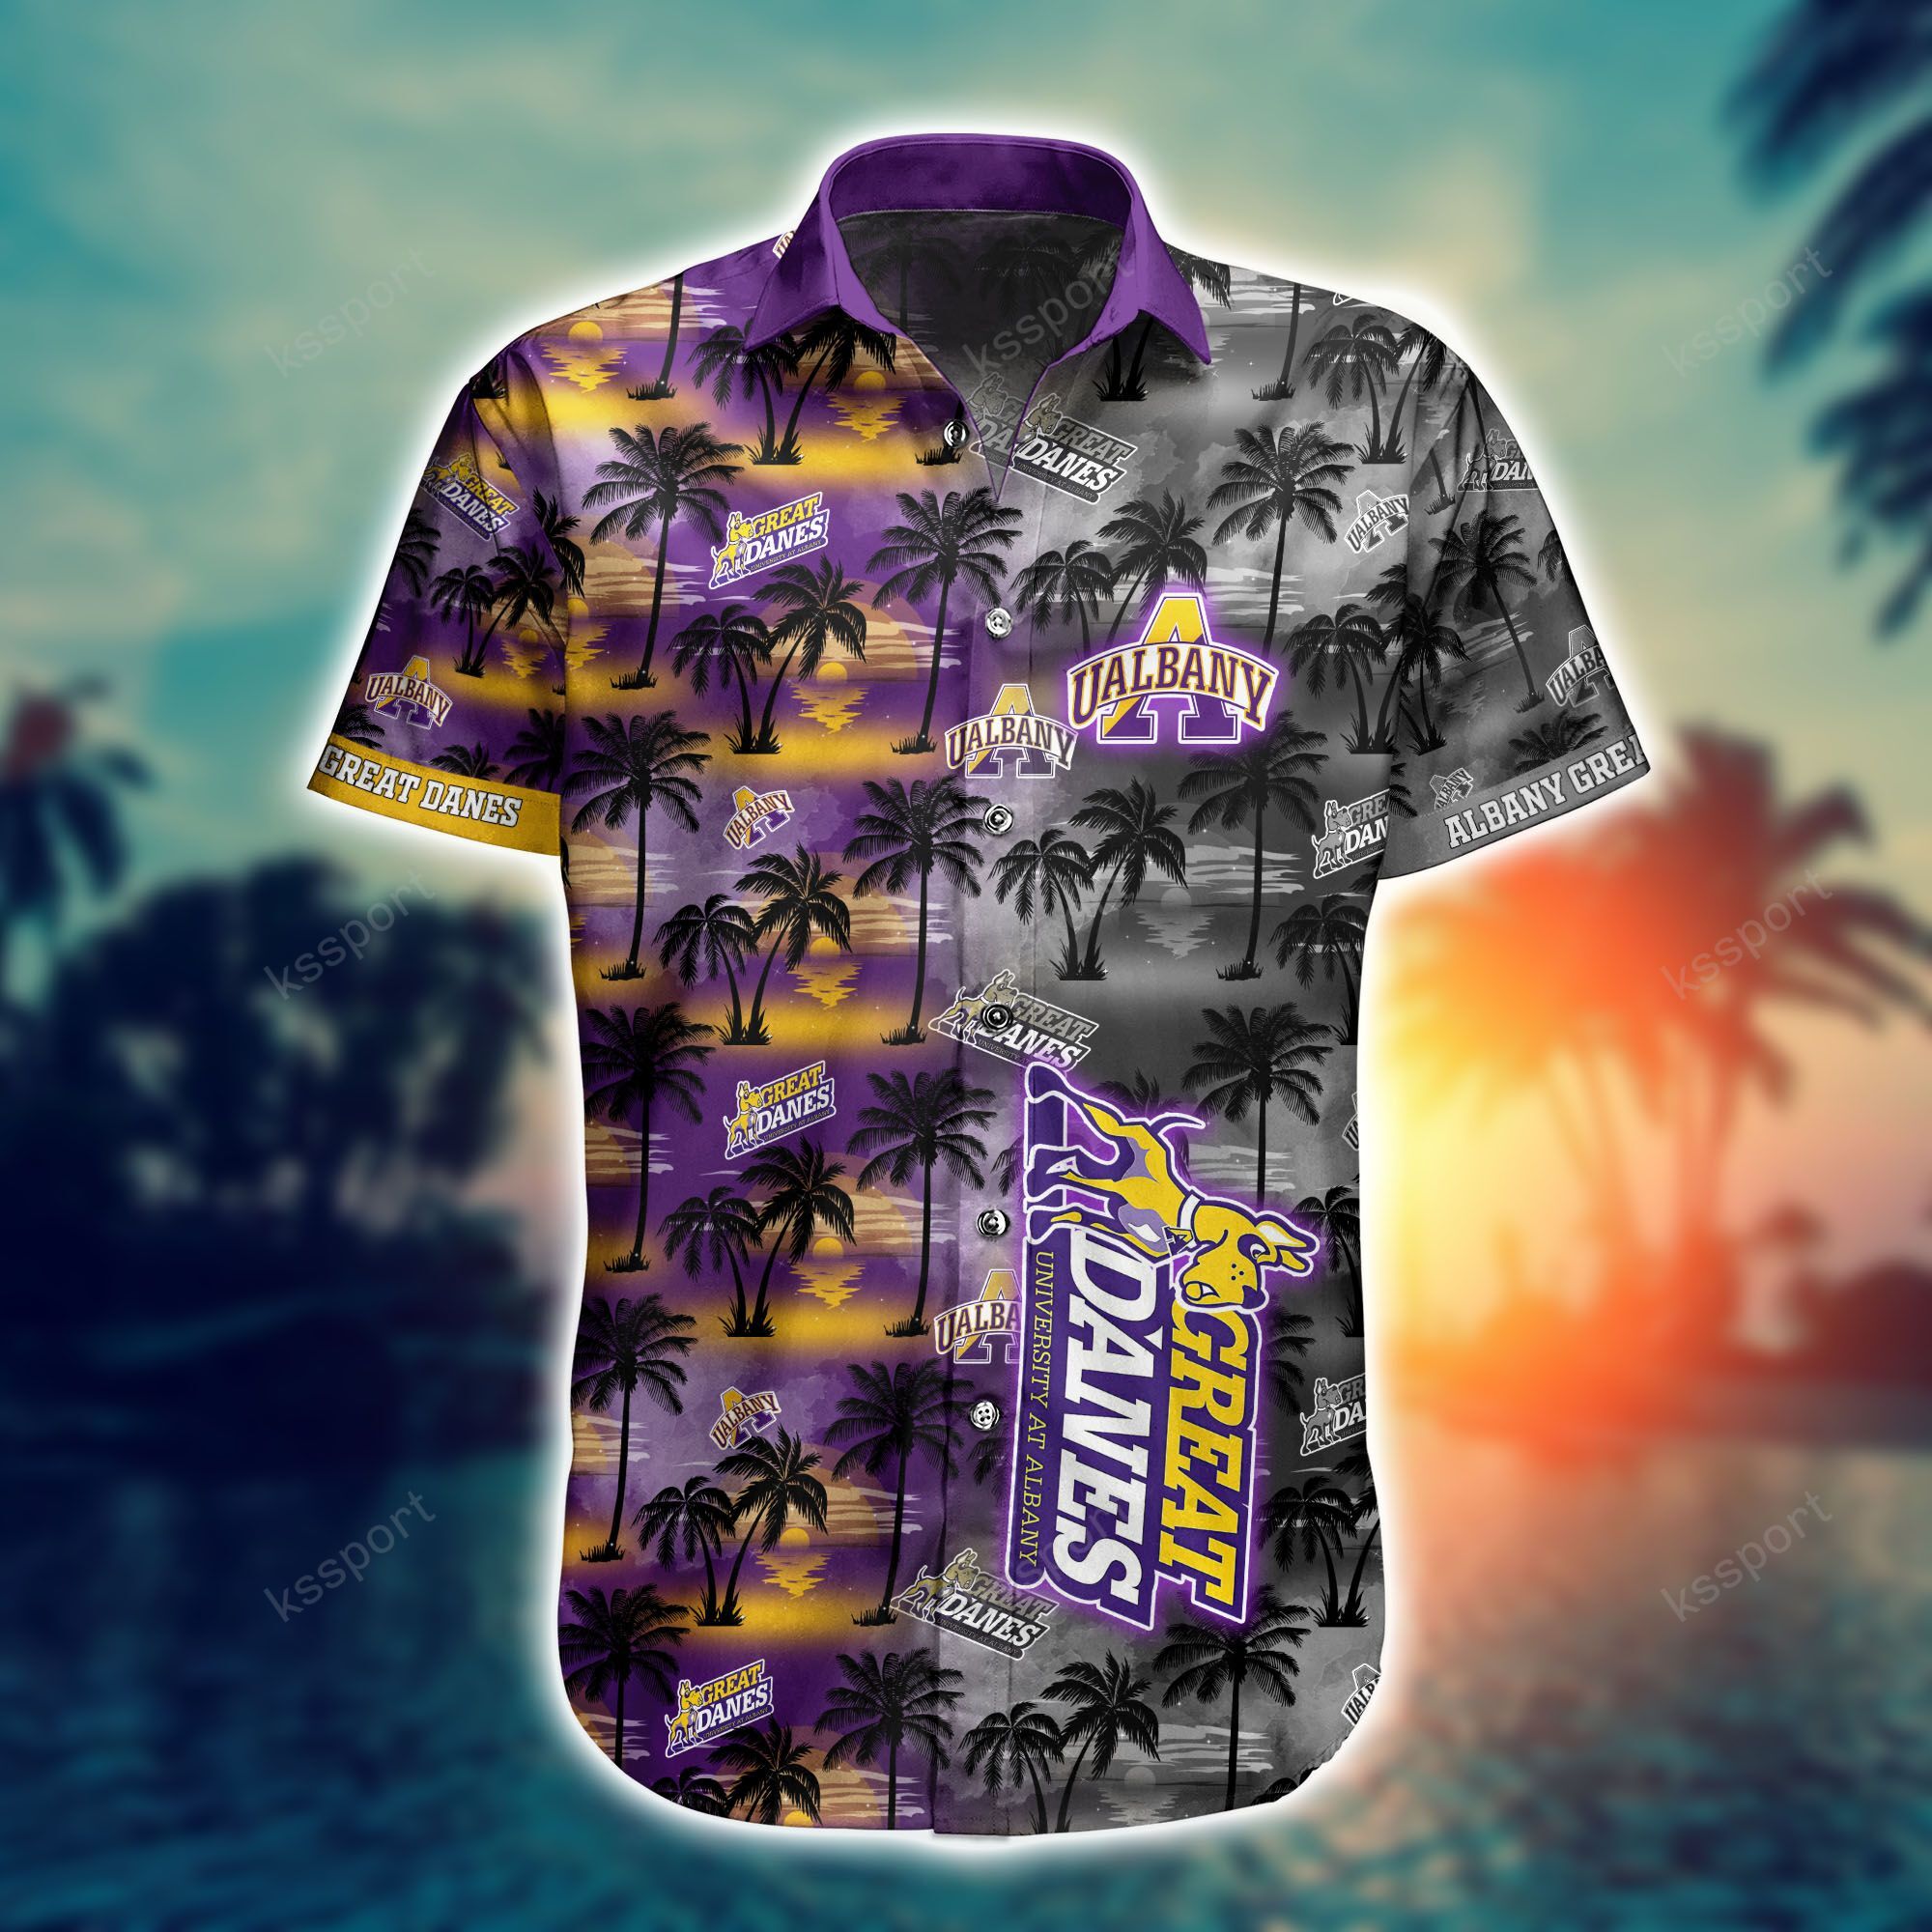 Hawaiian shirt and shorts is a great way to look stylish at a beach party 49